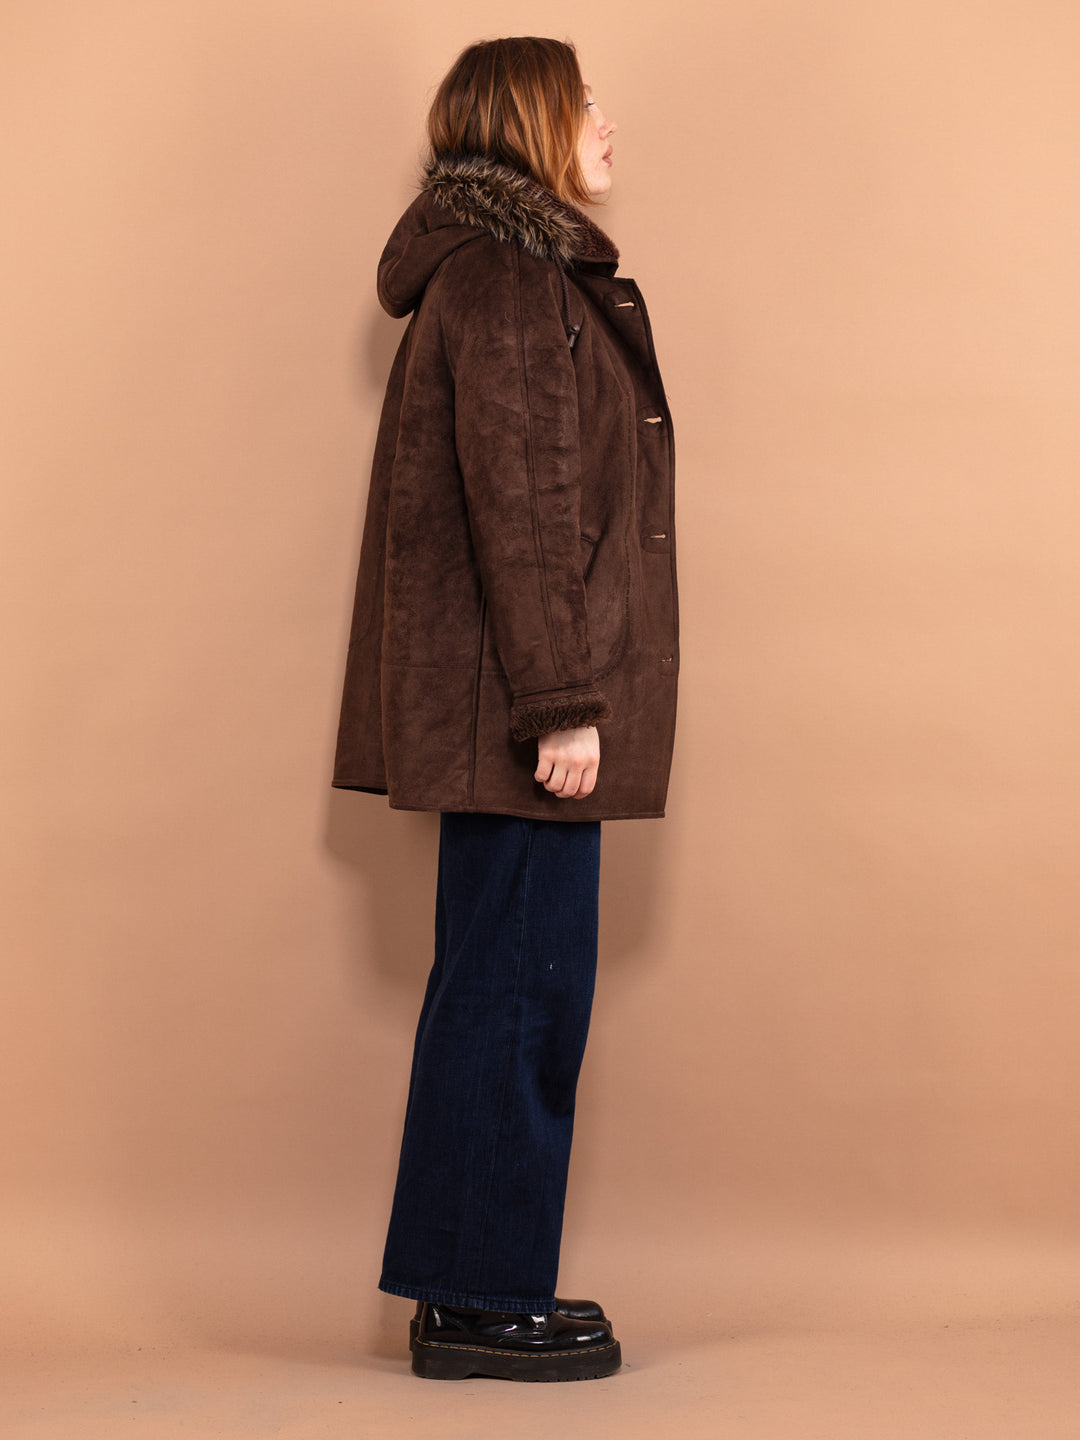 Hooded Faux Sheepskin Coat 90's, Size L Large, Vintage Women Faux Fur Trim Overcoat, Dark Brown Button Up Coat, Thick Cozy Outerwear